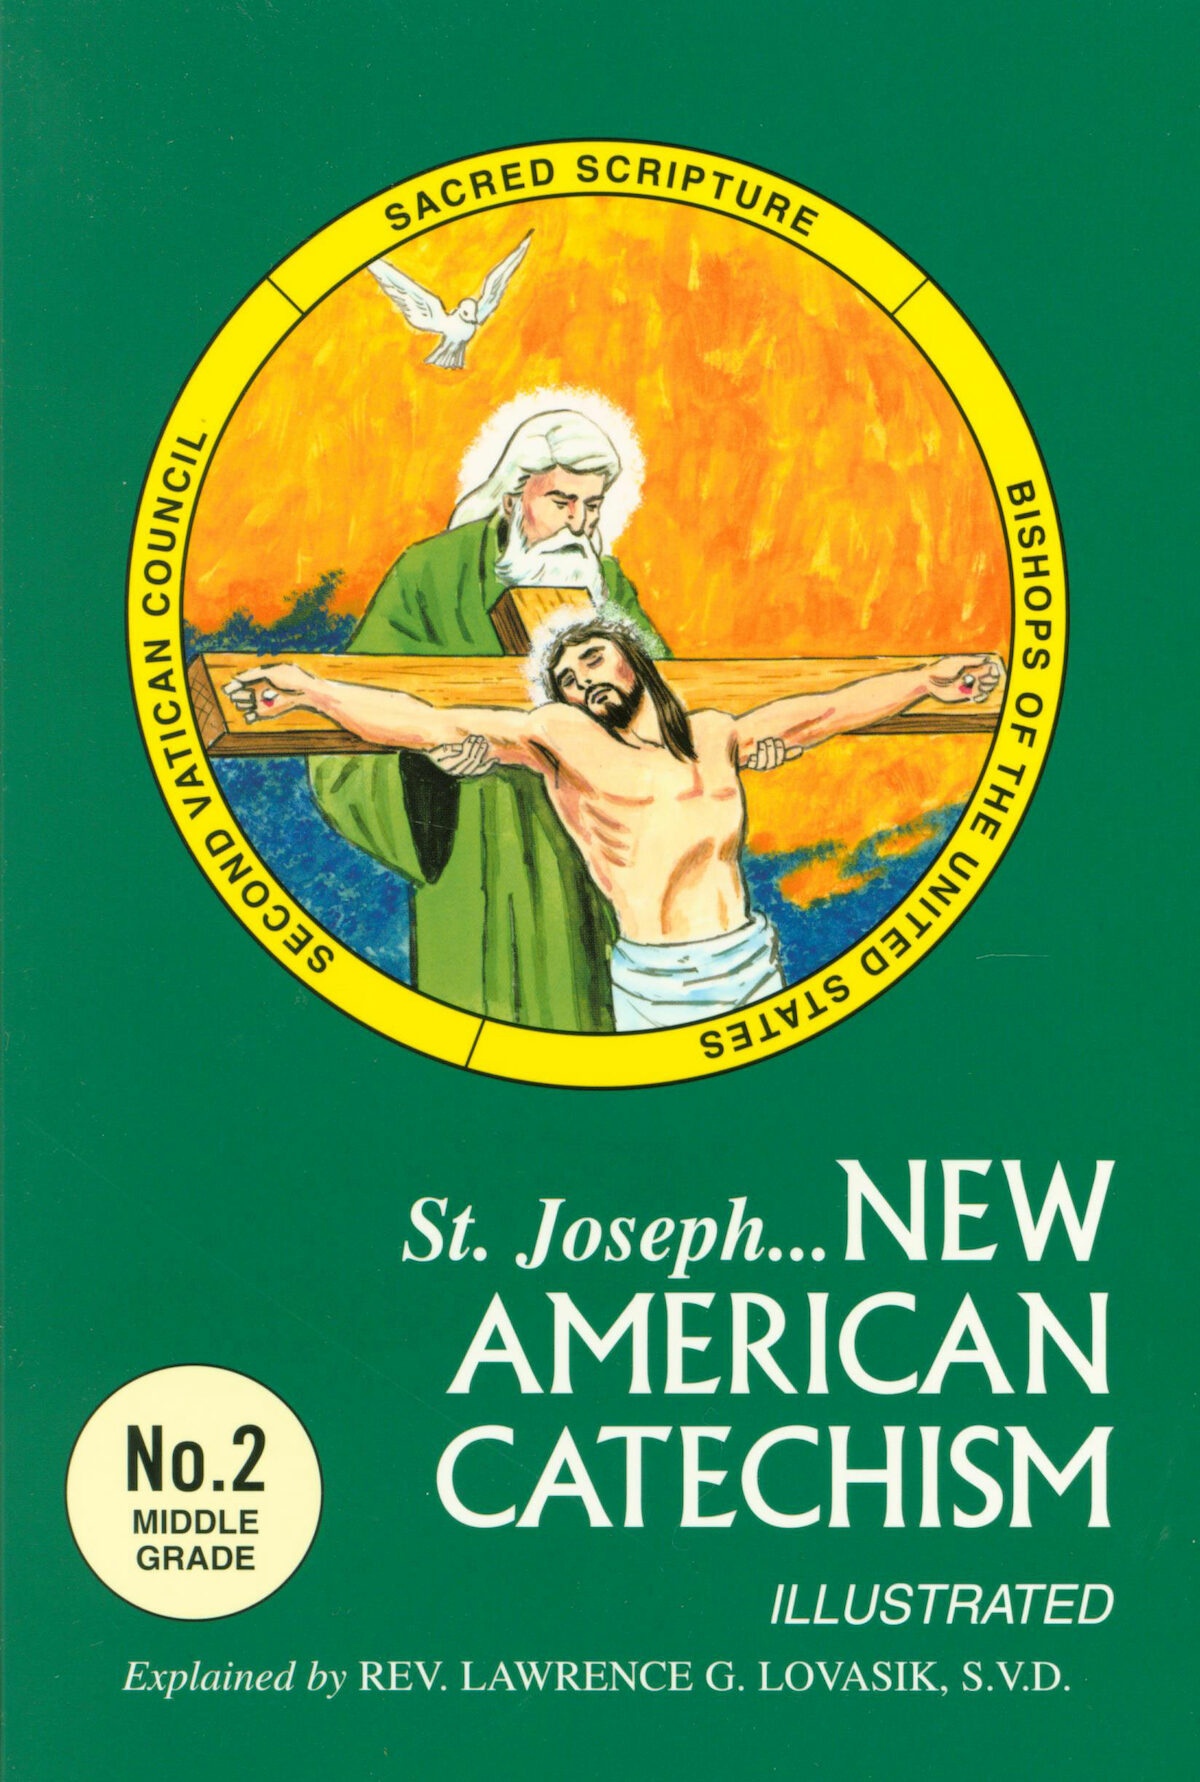 St. Joseph New American Catechism, No. 2